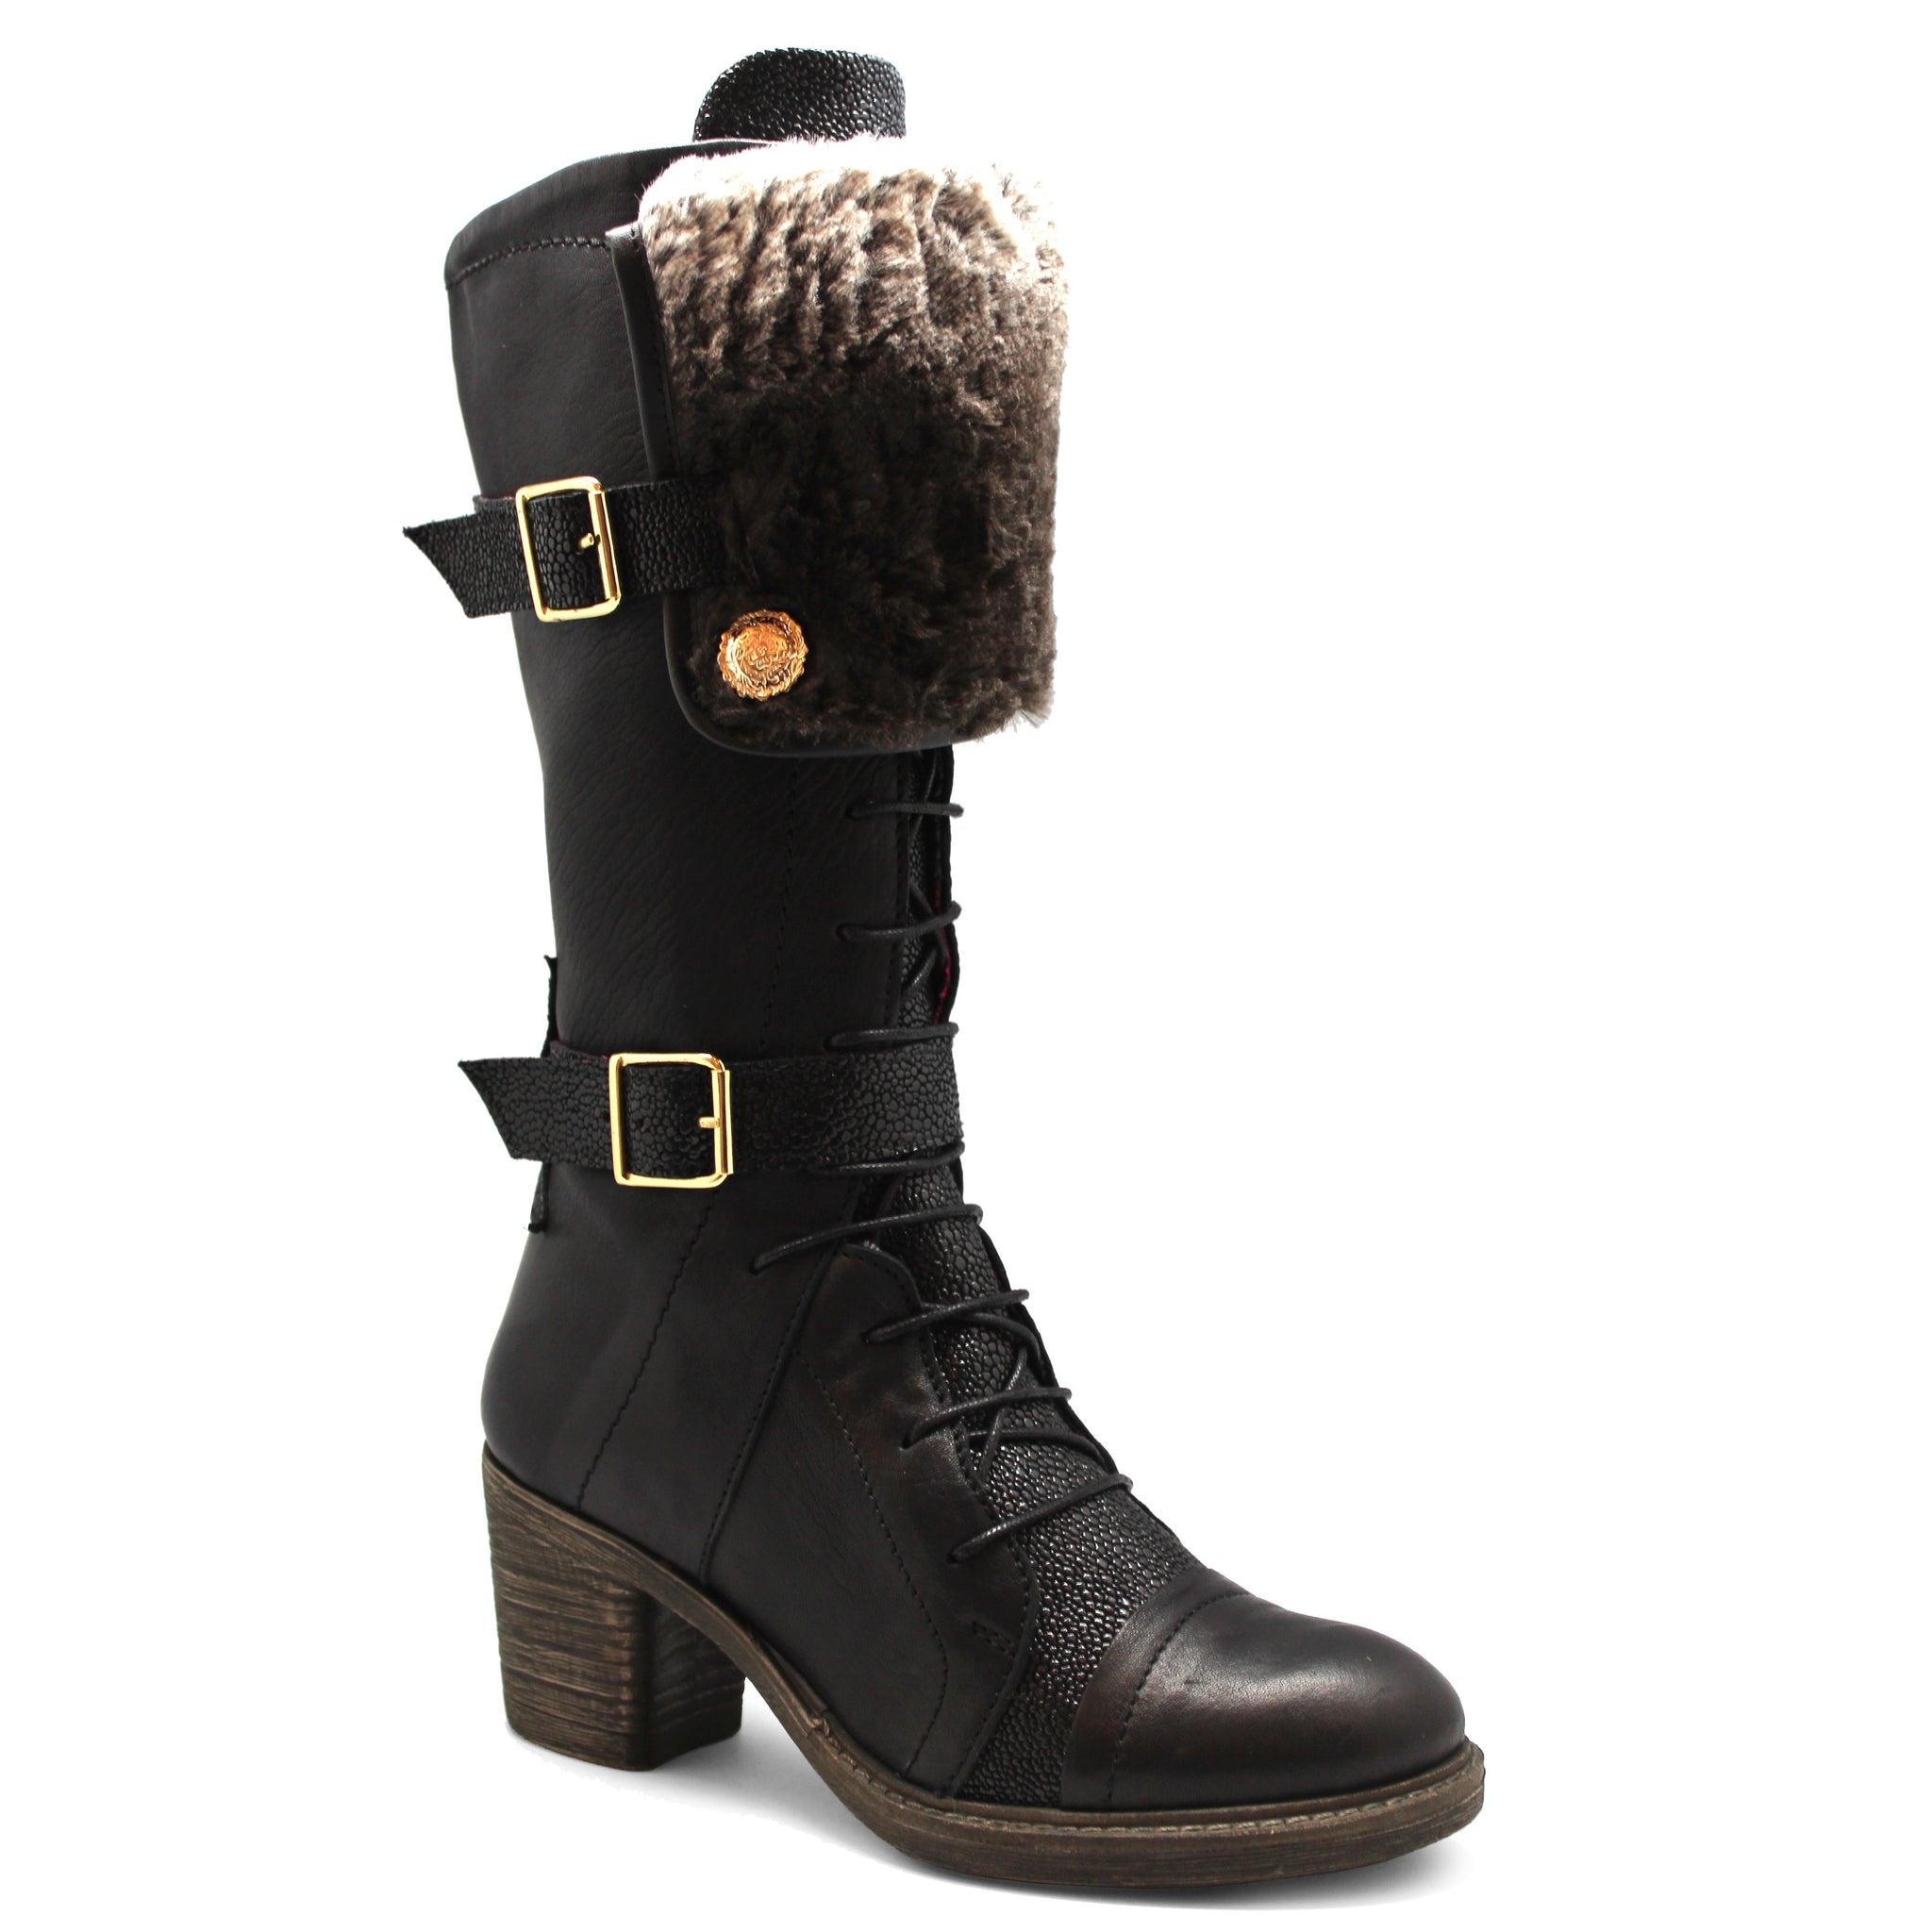 Chanii B "Cadeau"   Black boot removable Faux Fur (Warm Lining)